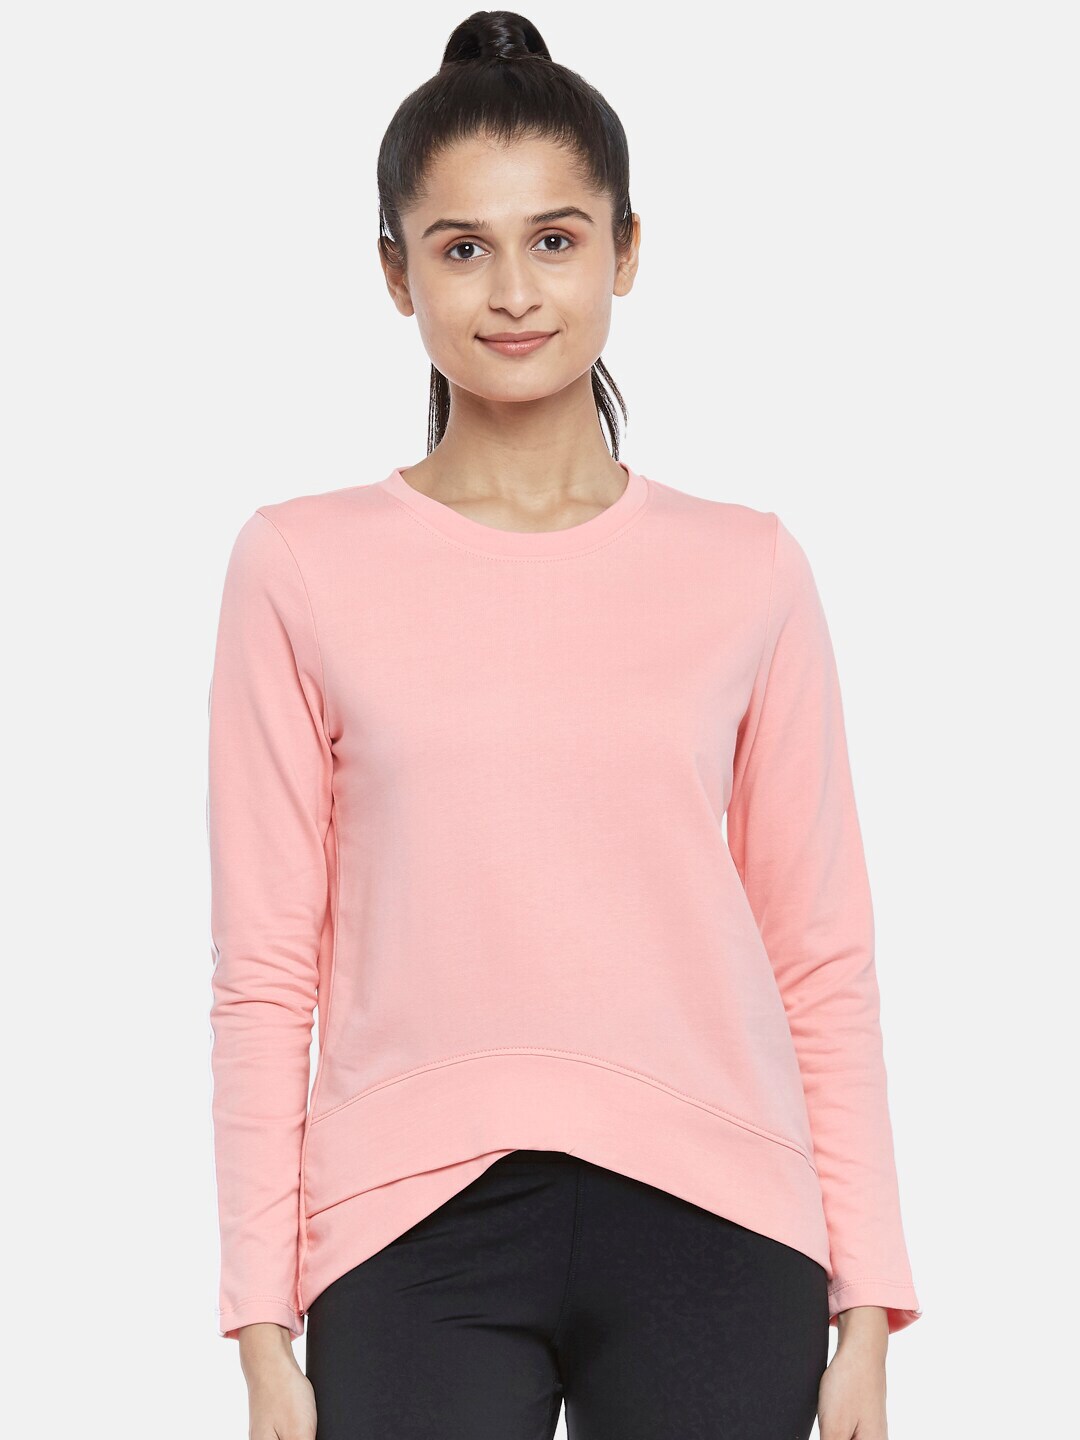 Ajile by Pantaloons Women Pink Solid Sweatshirt Price in India